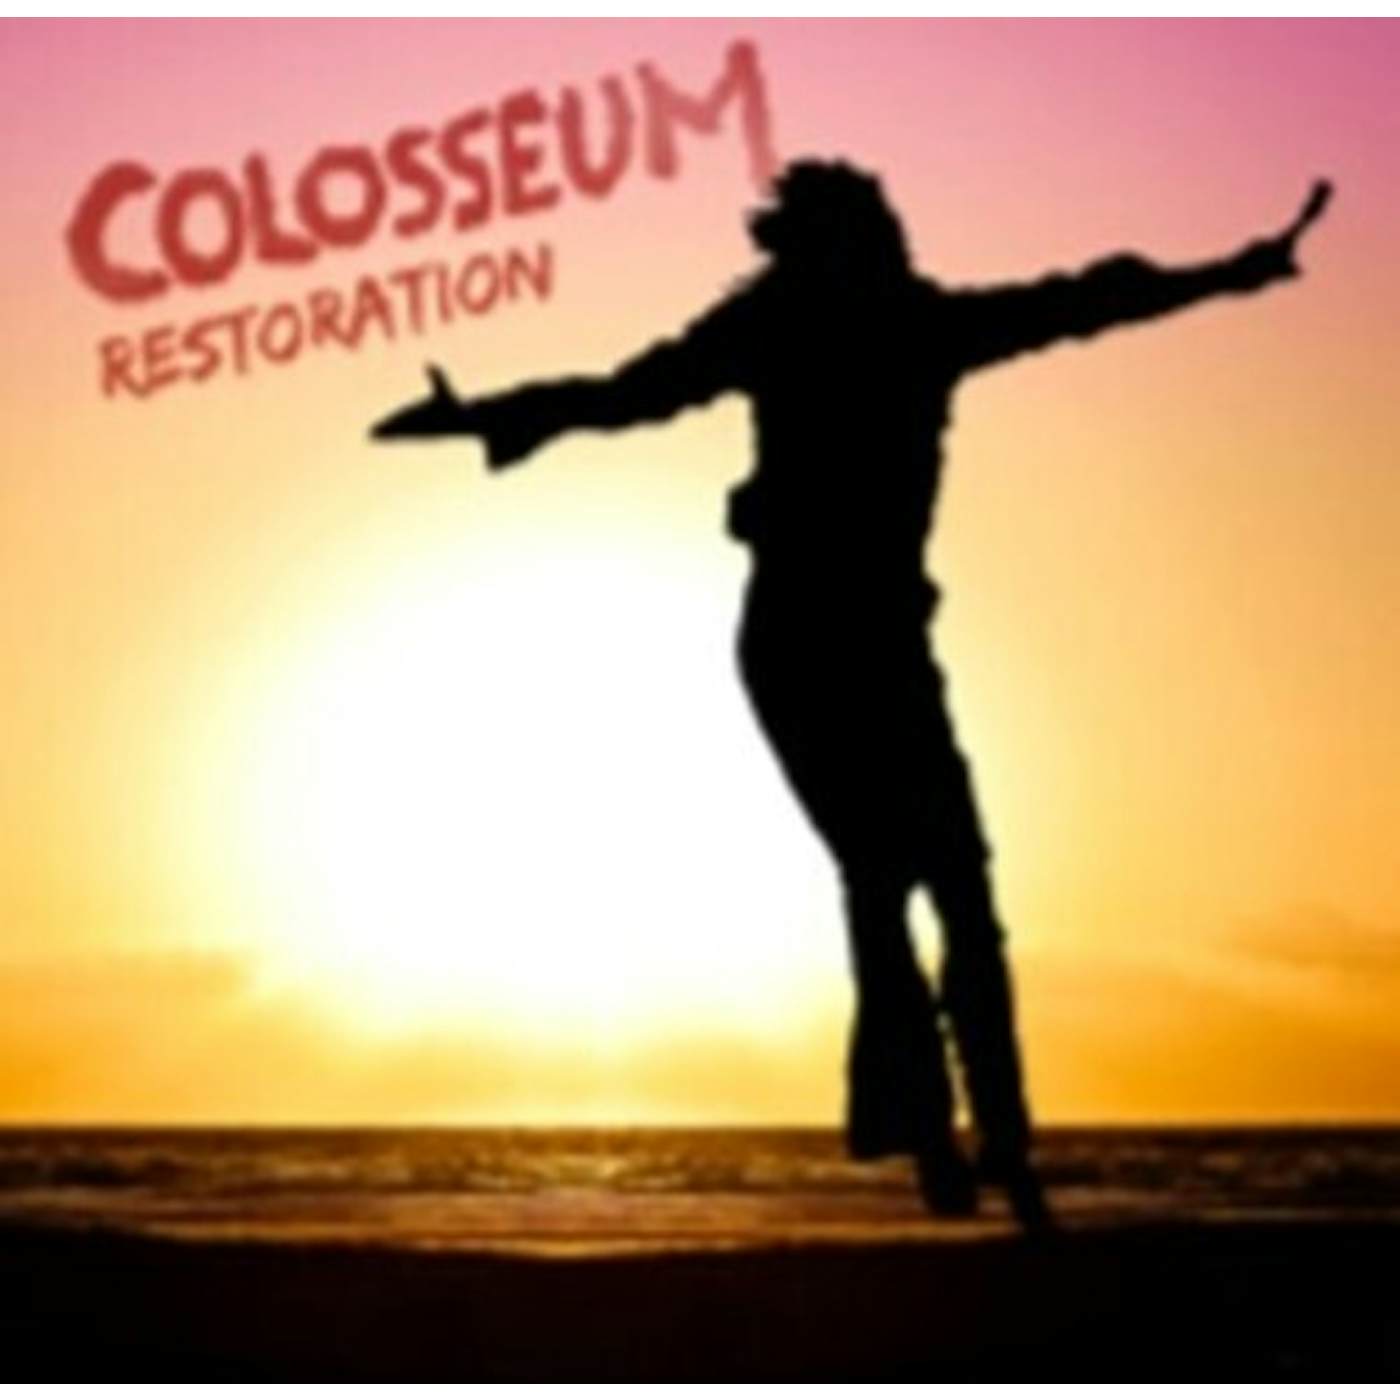 Colosseum Restoration vinyl record